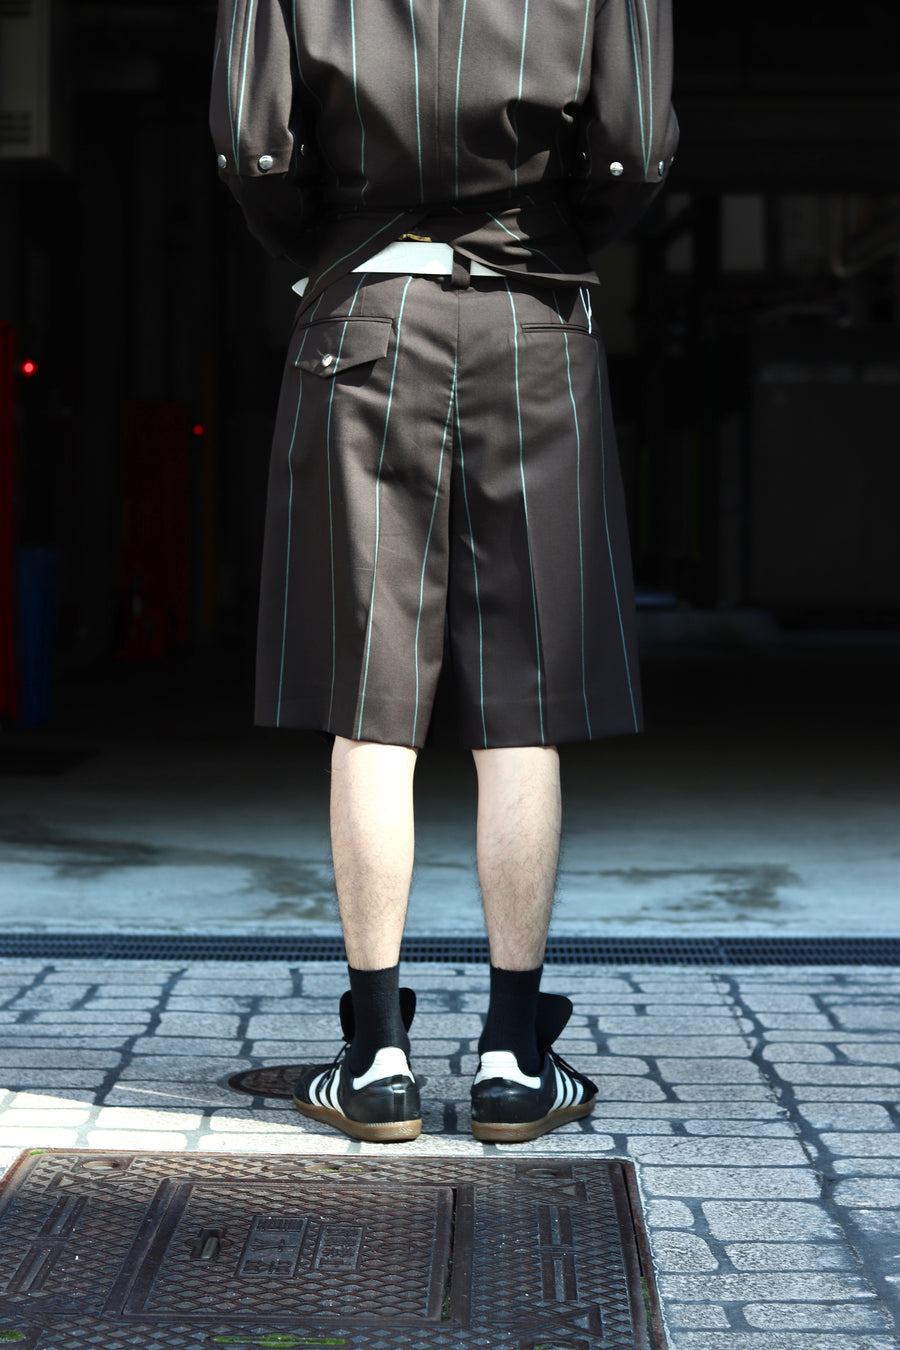 LITTLEBIG  Stripe Short Trousers（Black or Navy）